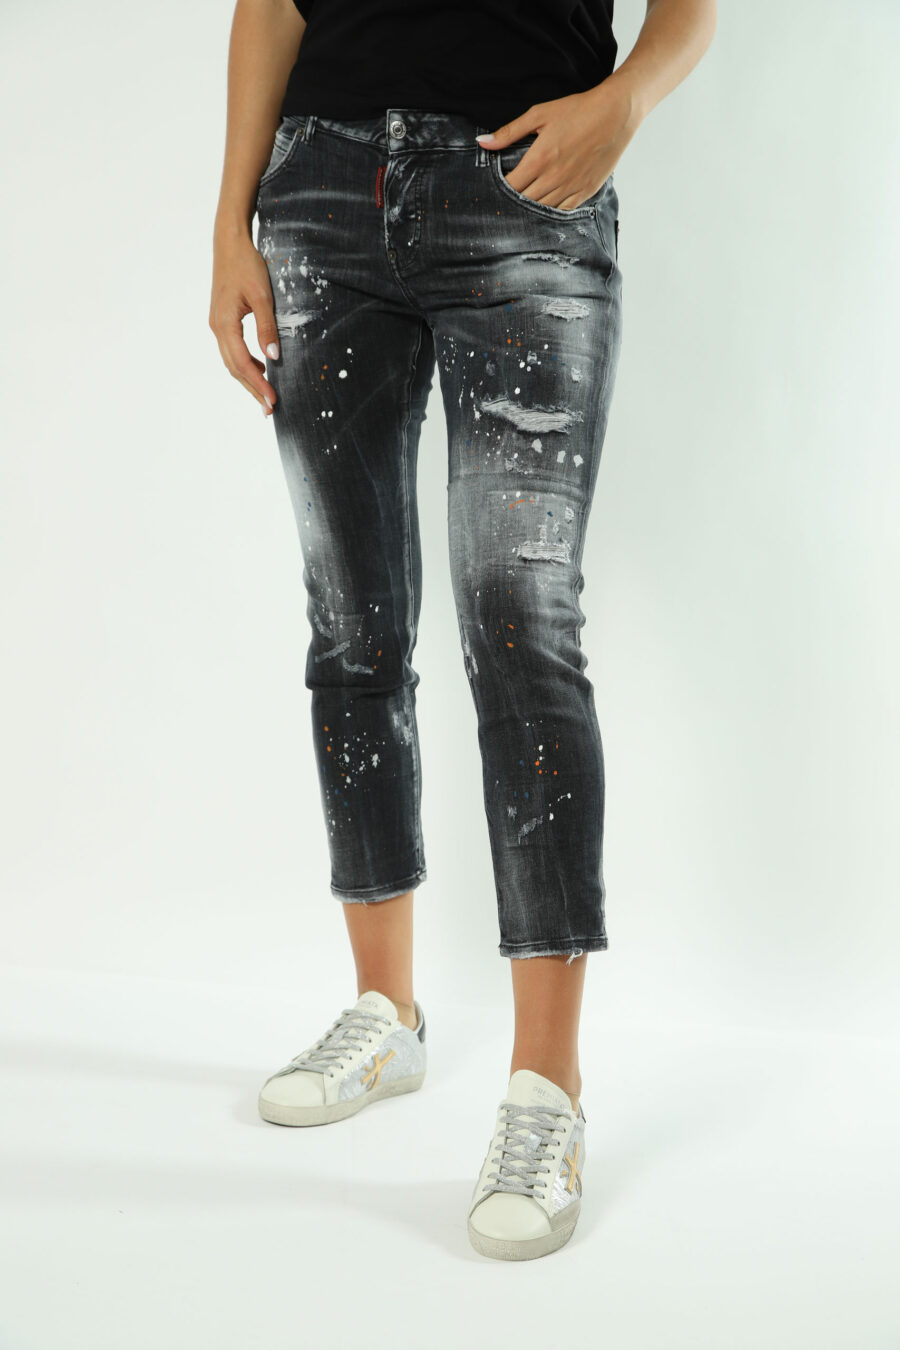 Jeans preto "cool girl" com pintura multicolorida - Fotos 1538